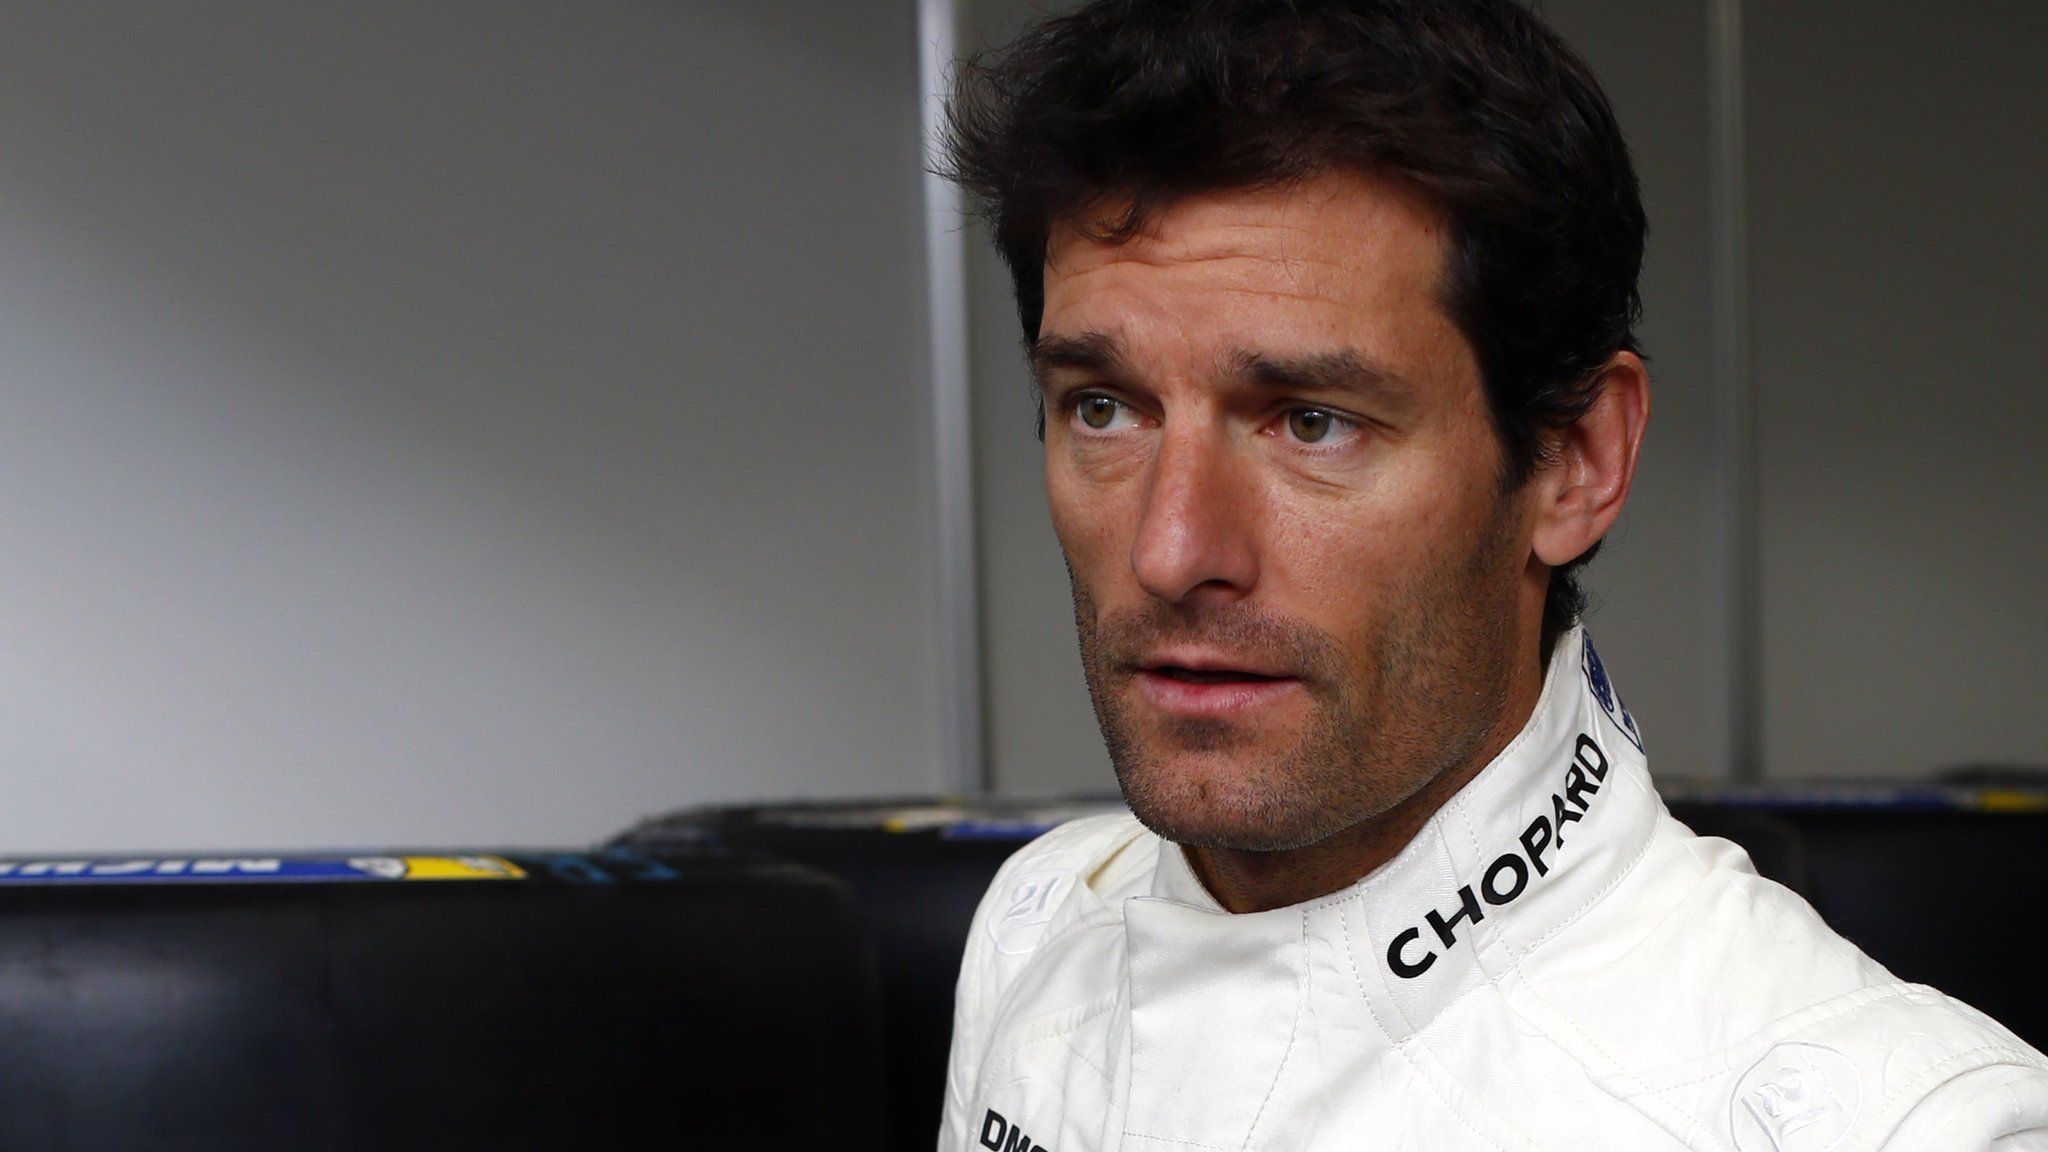 Ex-F1 driver Mark Webber